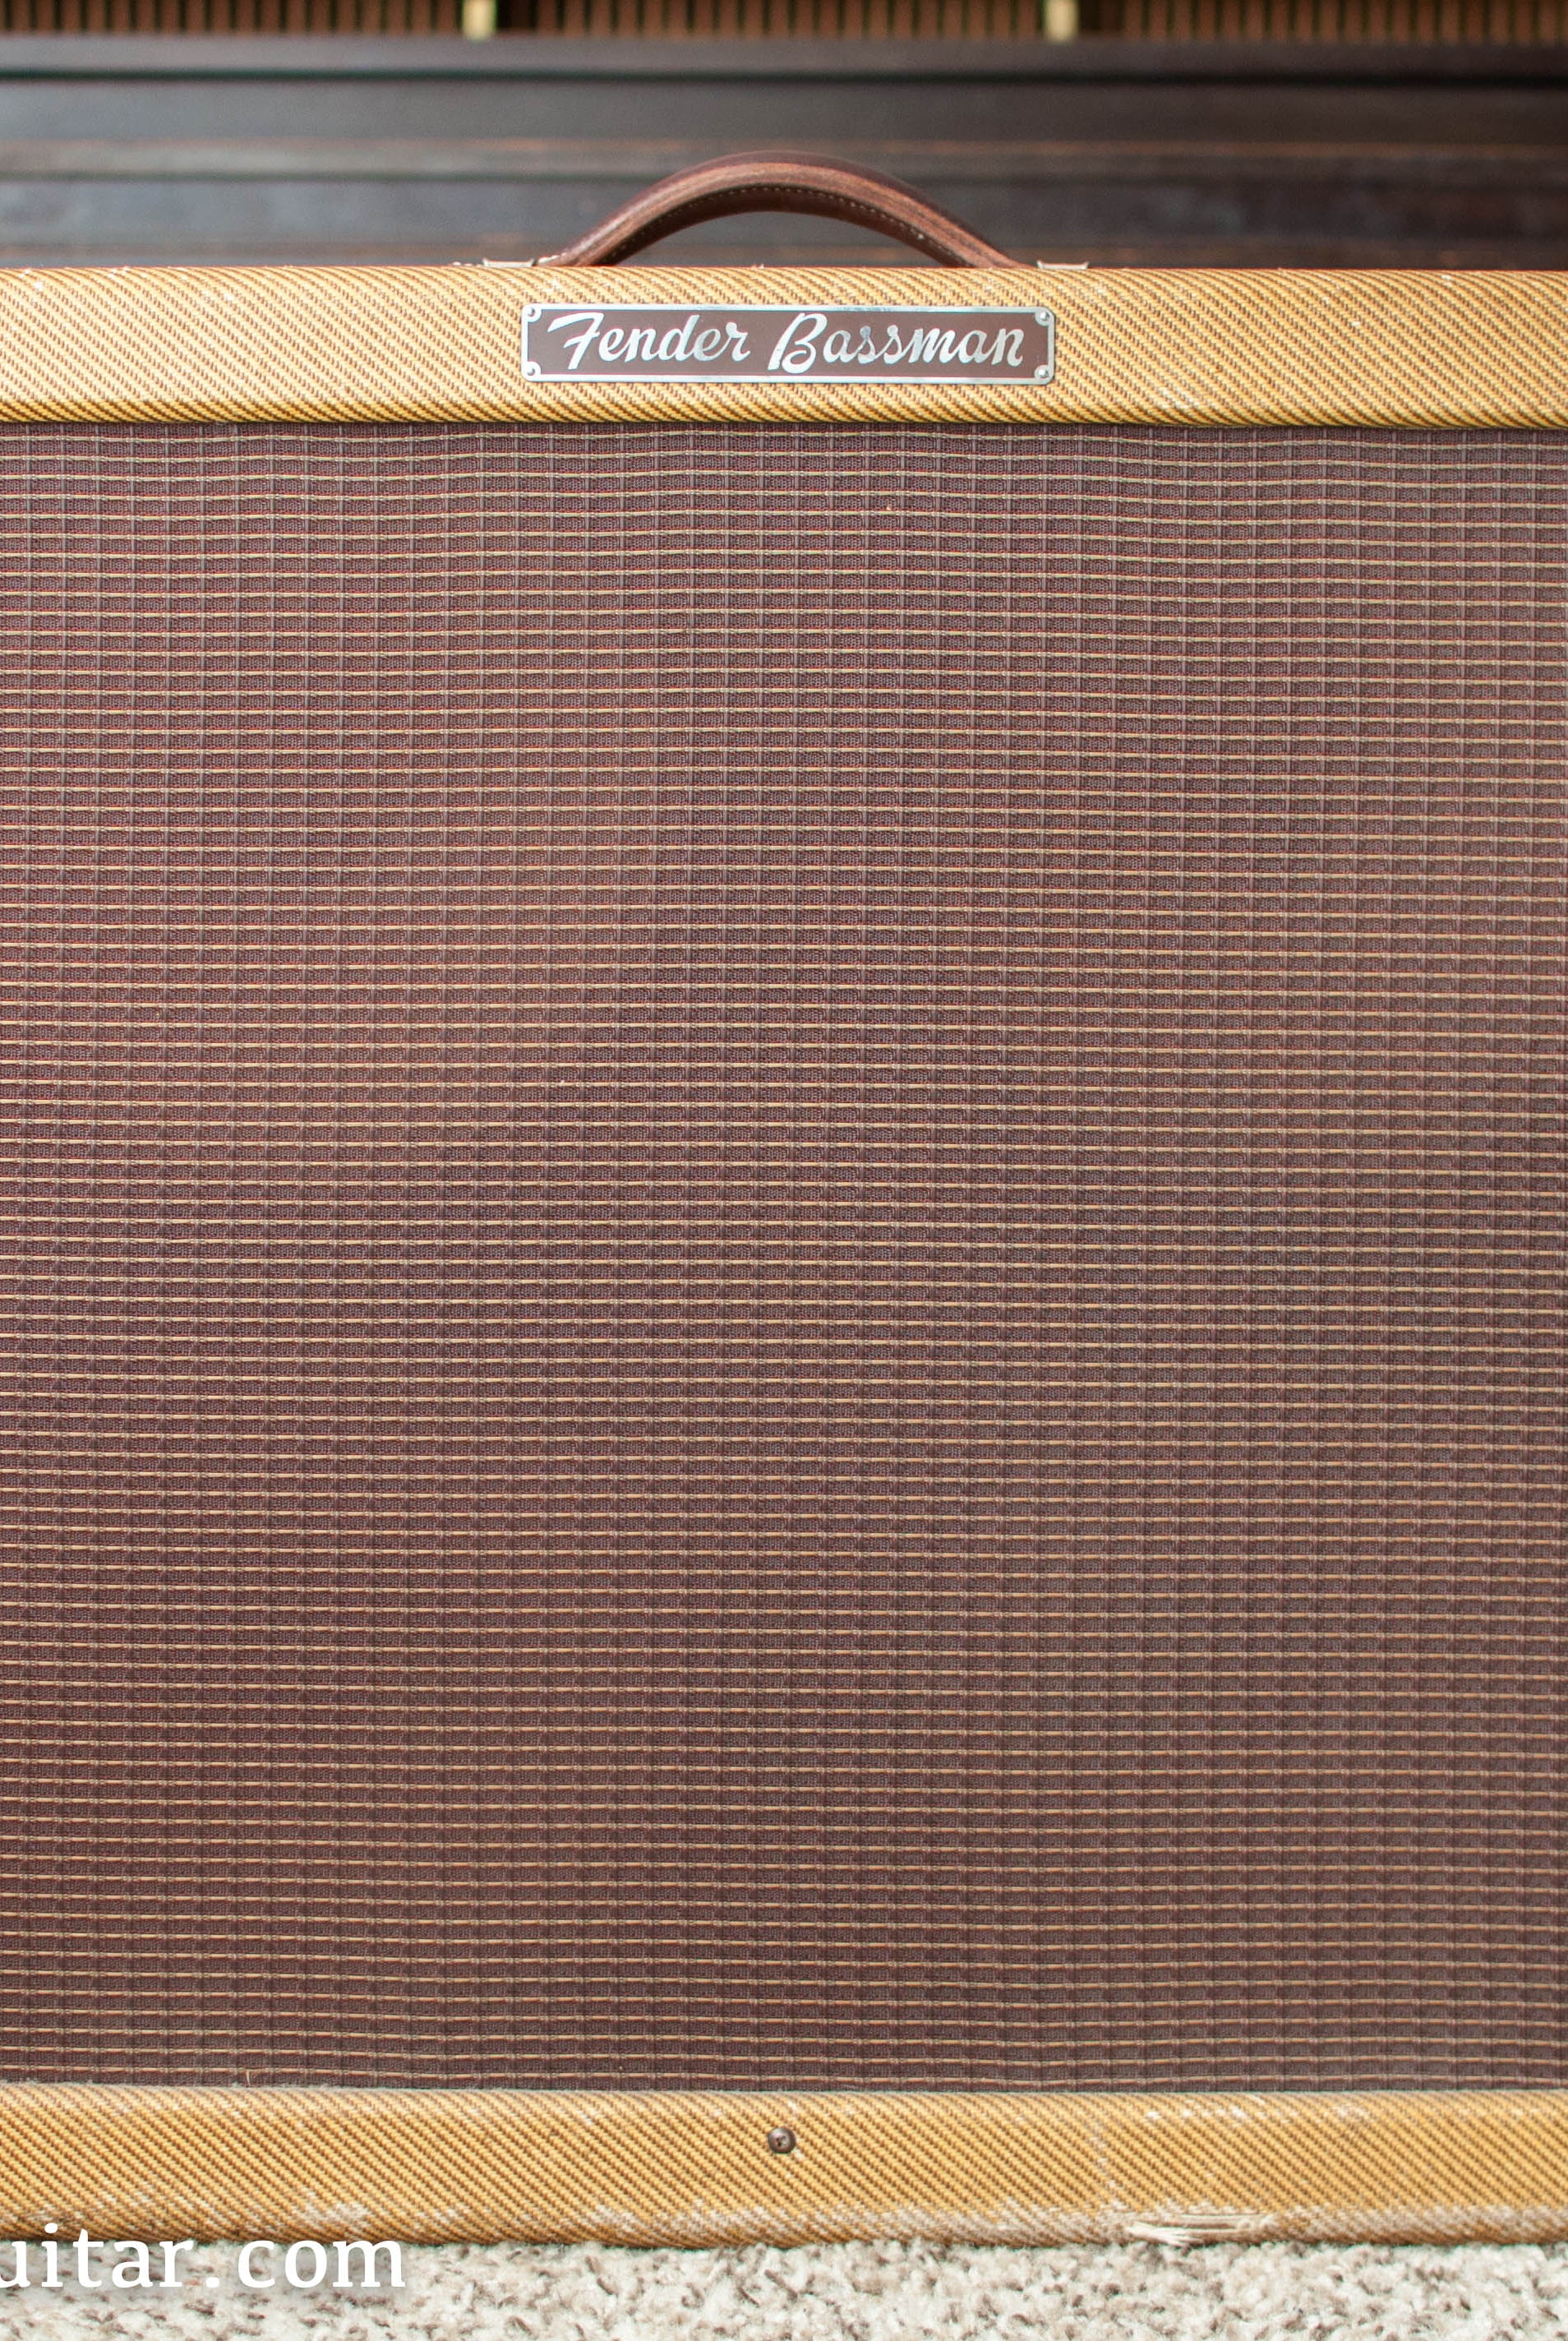 1958 Fender Bassman tweed guitar amplifier